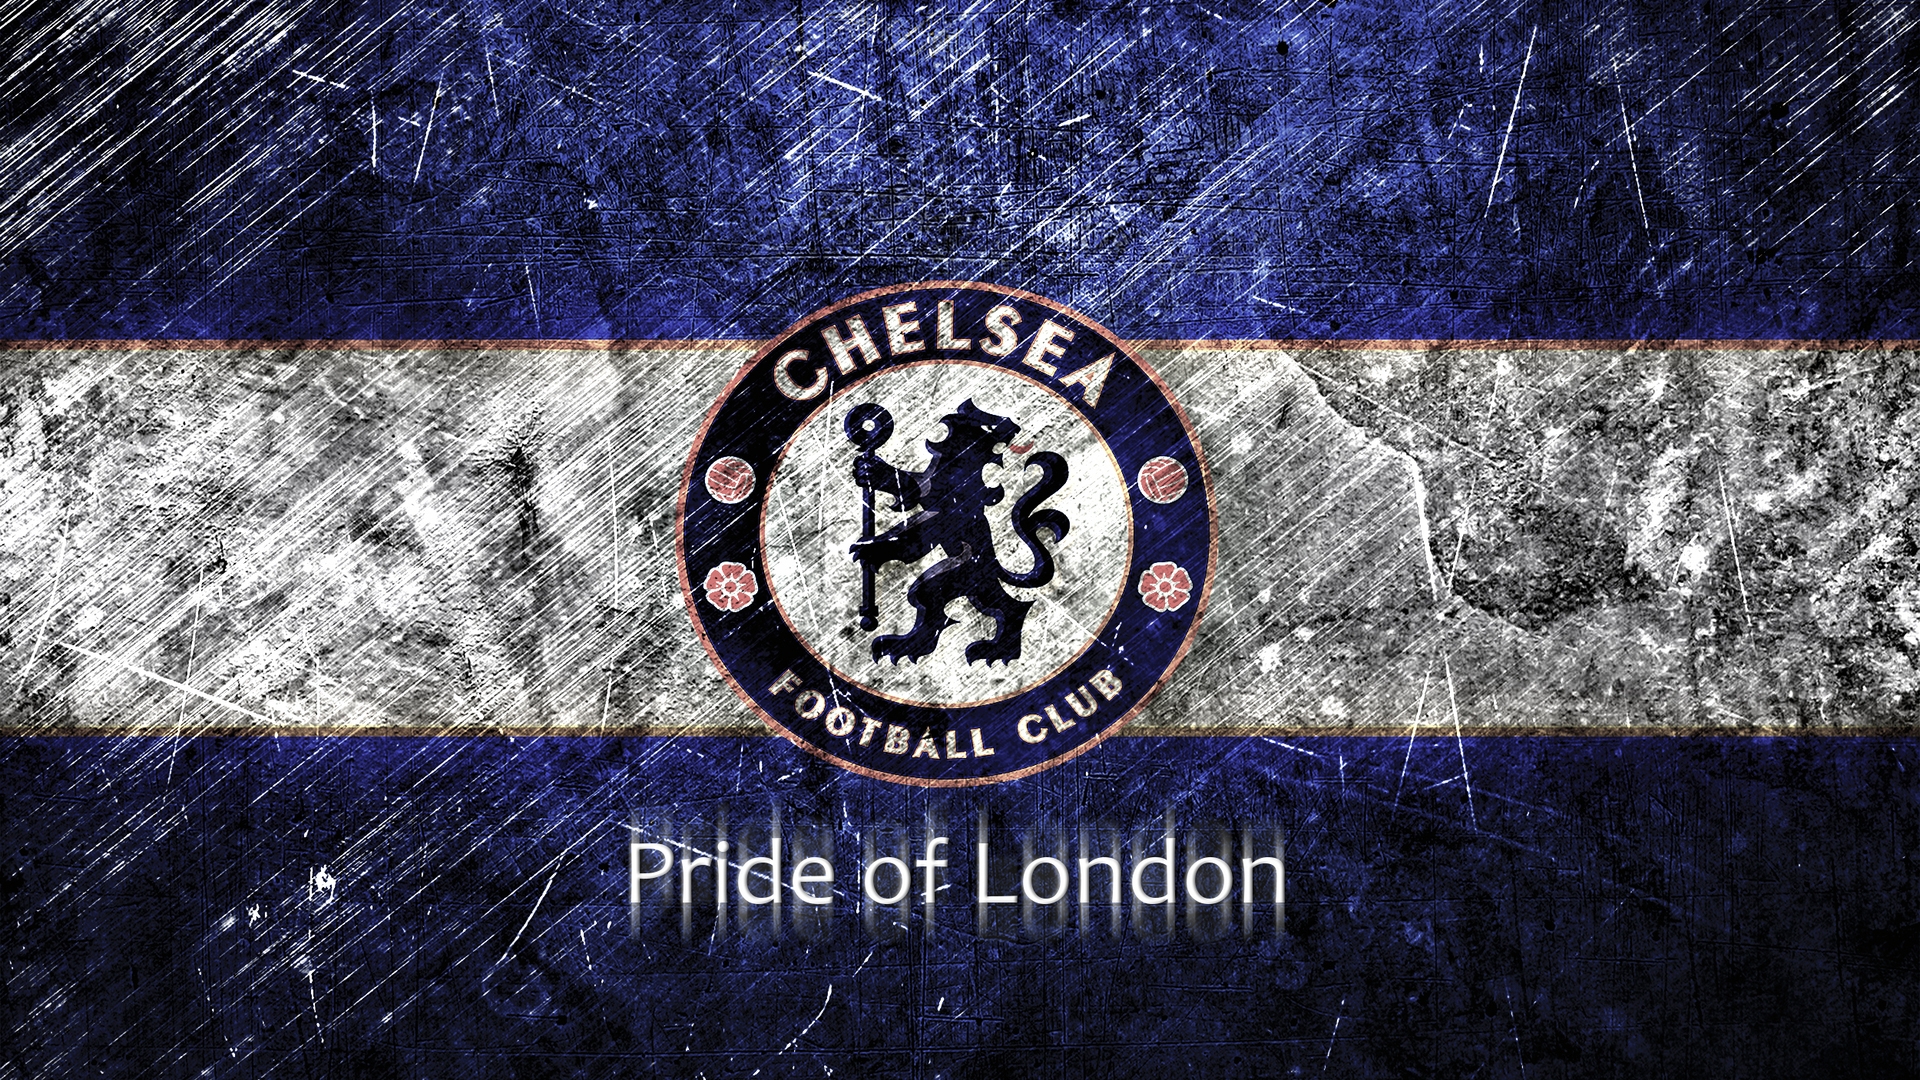 Chelsea Pride of London for 1920 x 1080 HDTV 1080p resolution